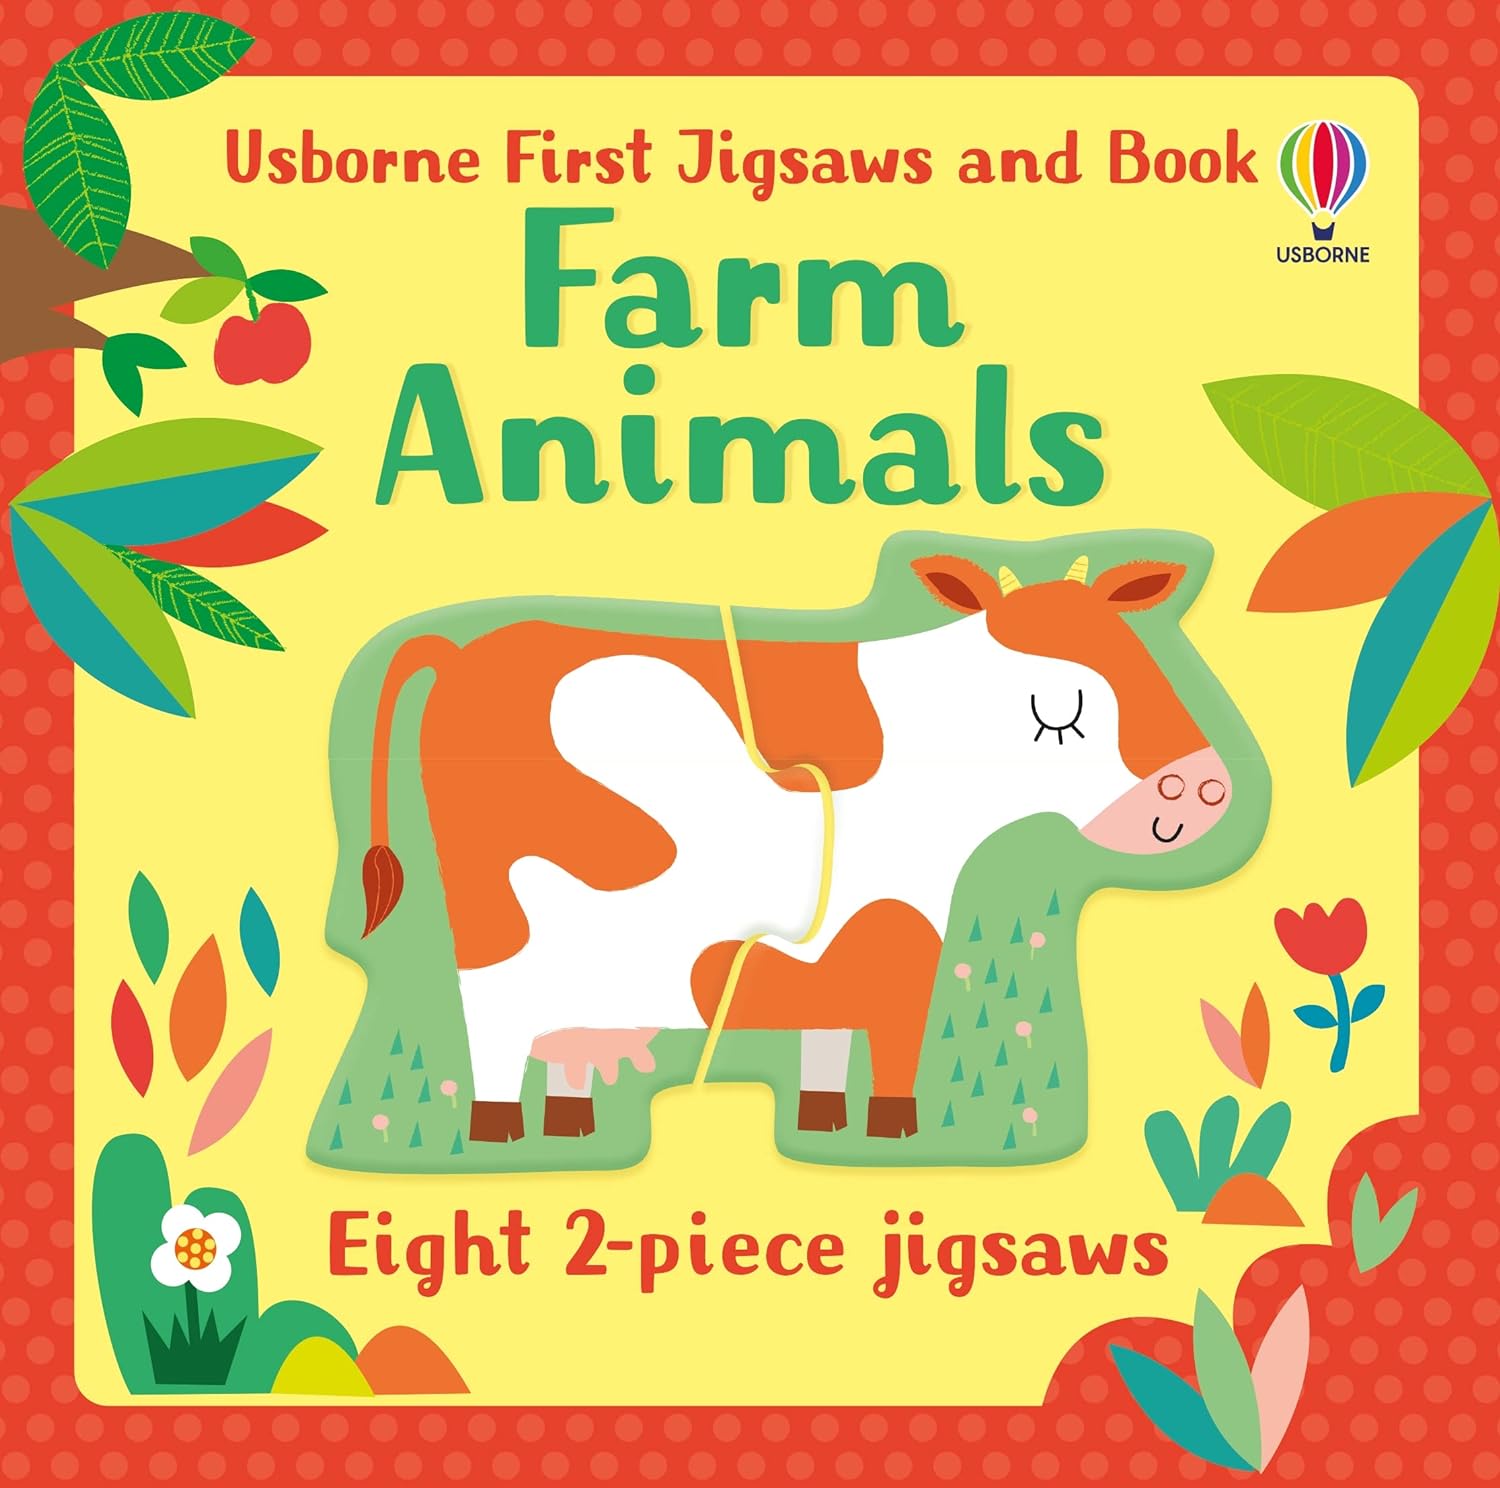 Usborne First Jigsaws and Book: Farm Animals (2 Piece)